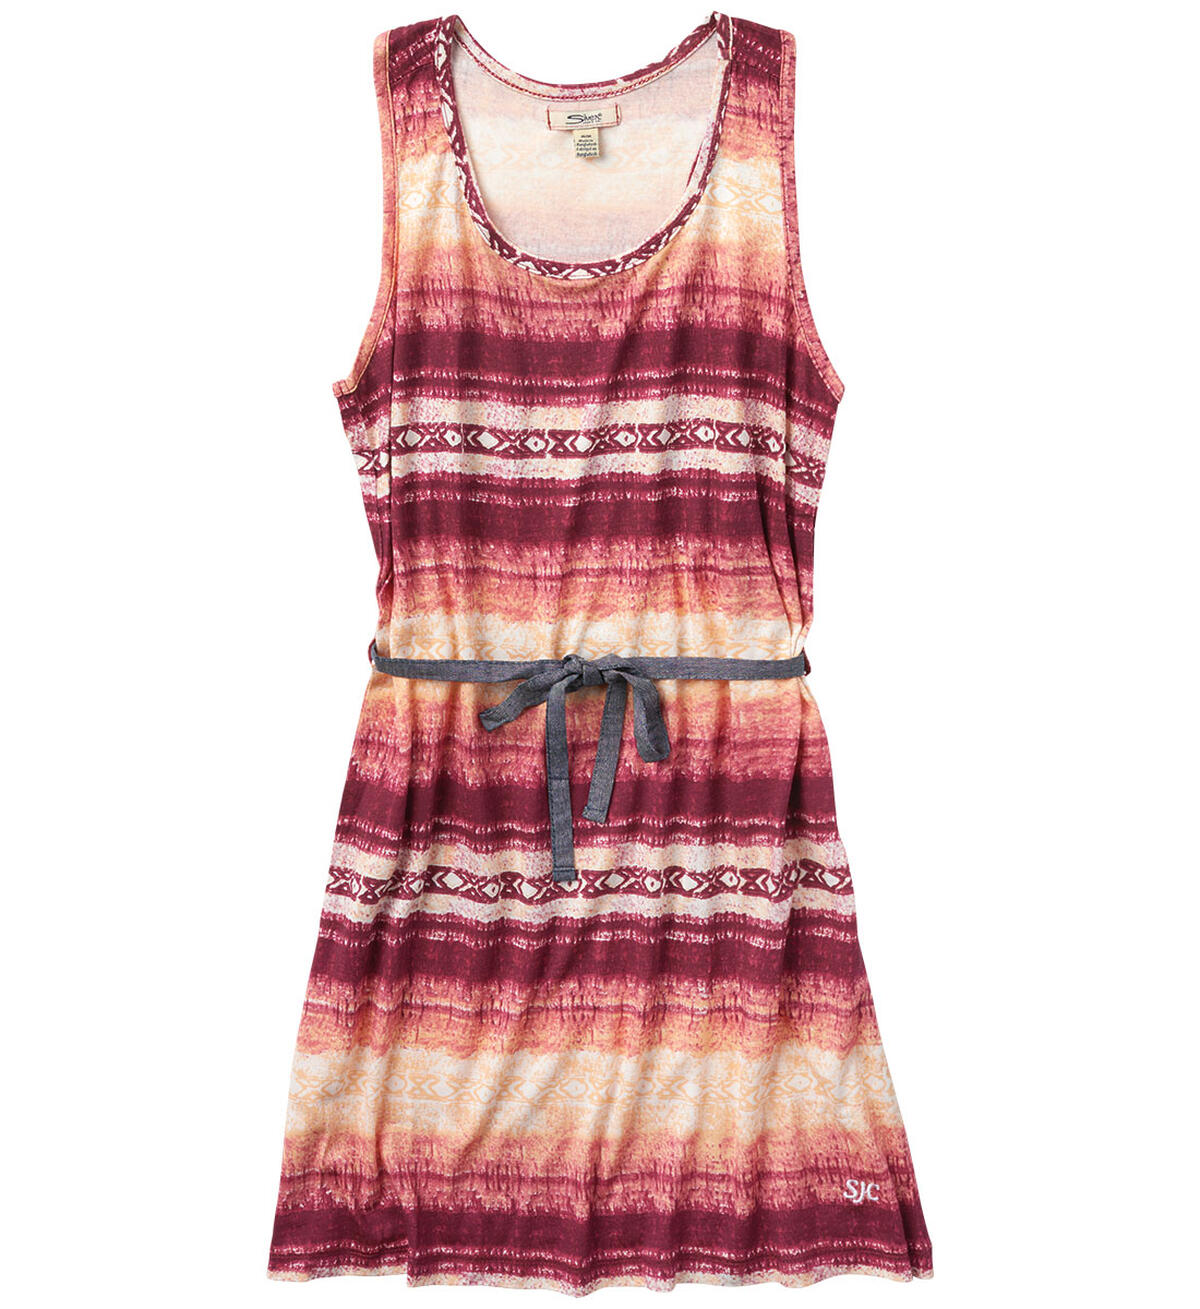 Sleeveless Tribal-Print Dress (7-16), , hi-res image number 0}